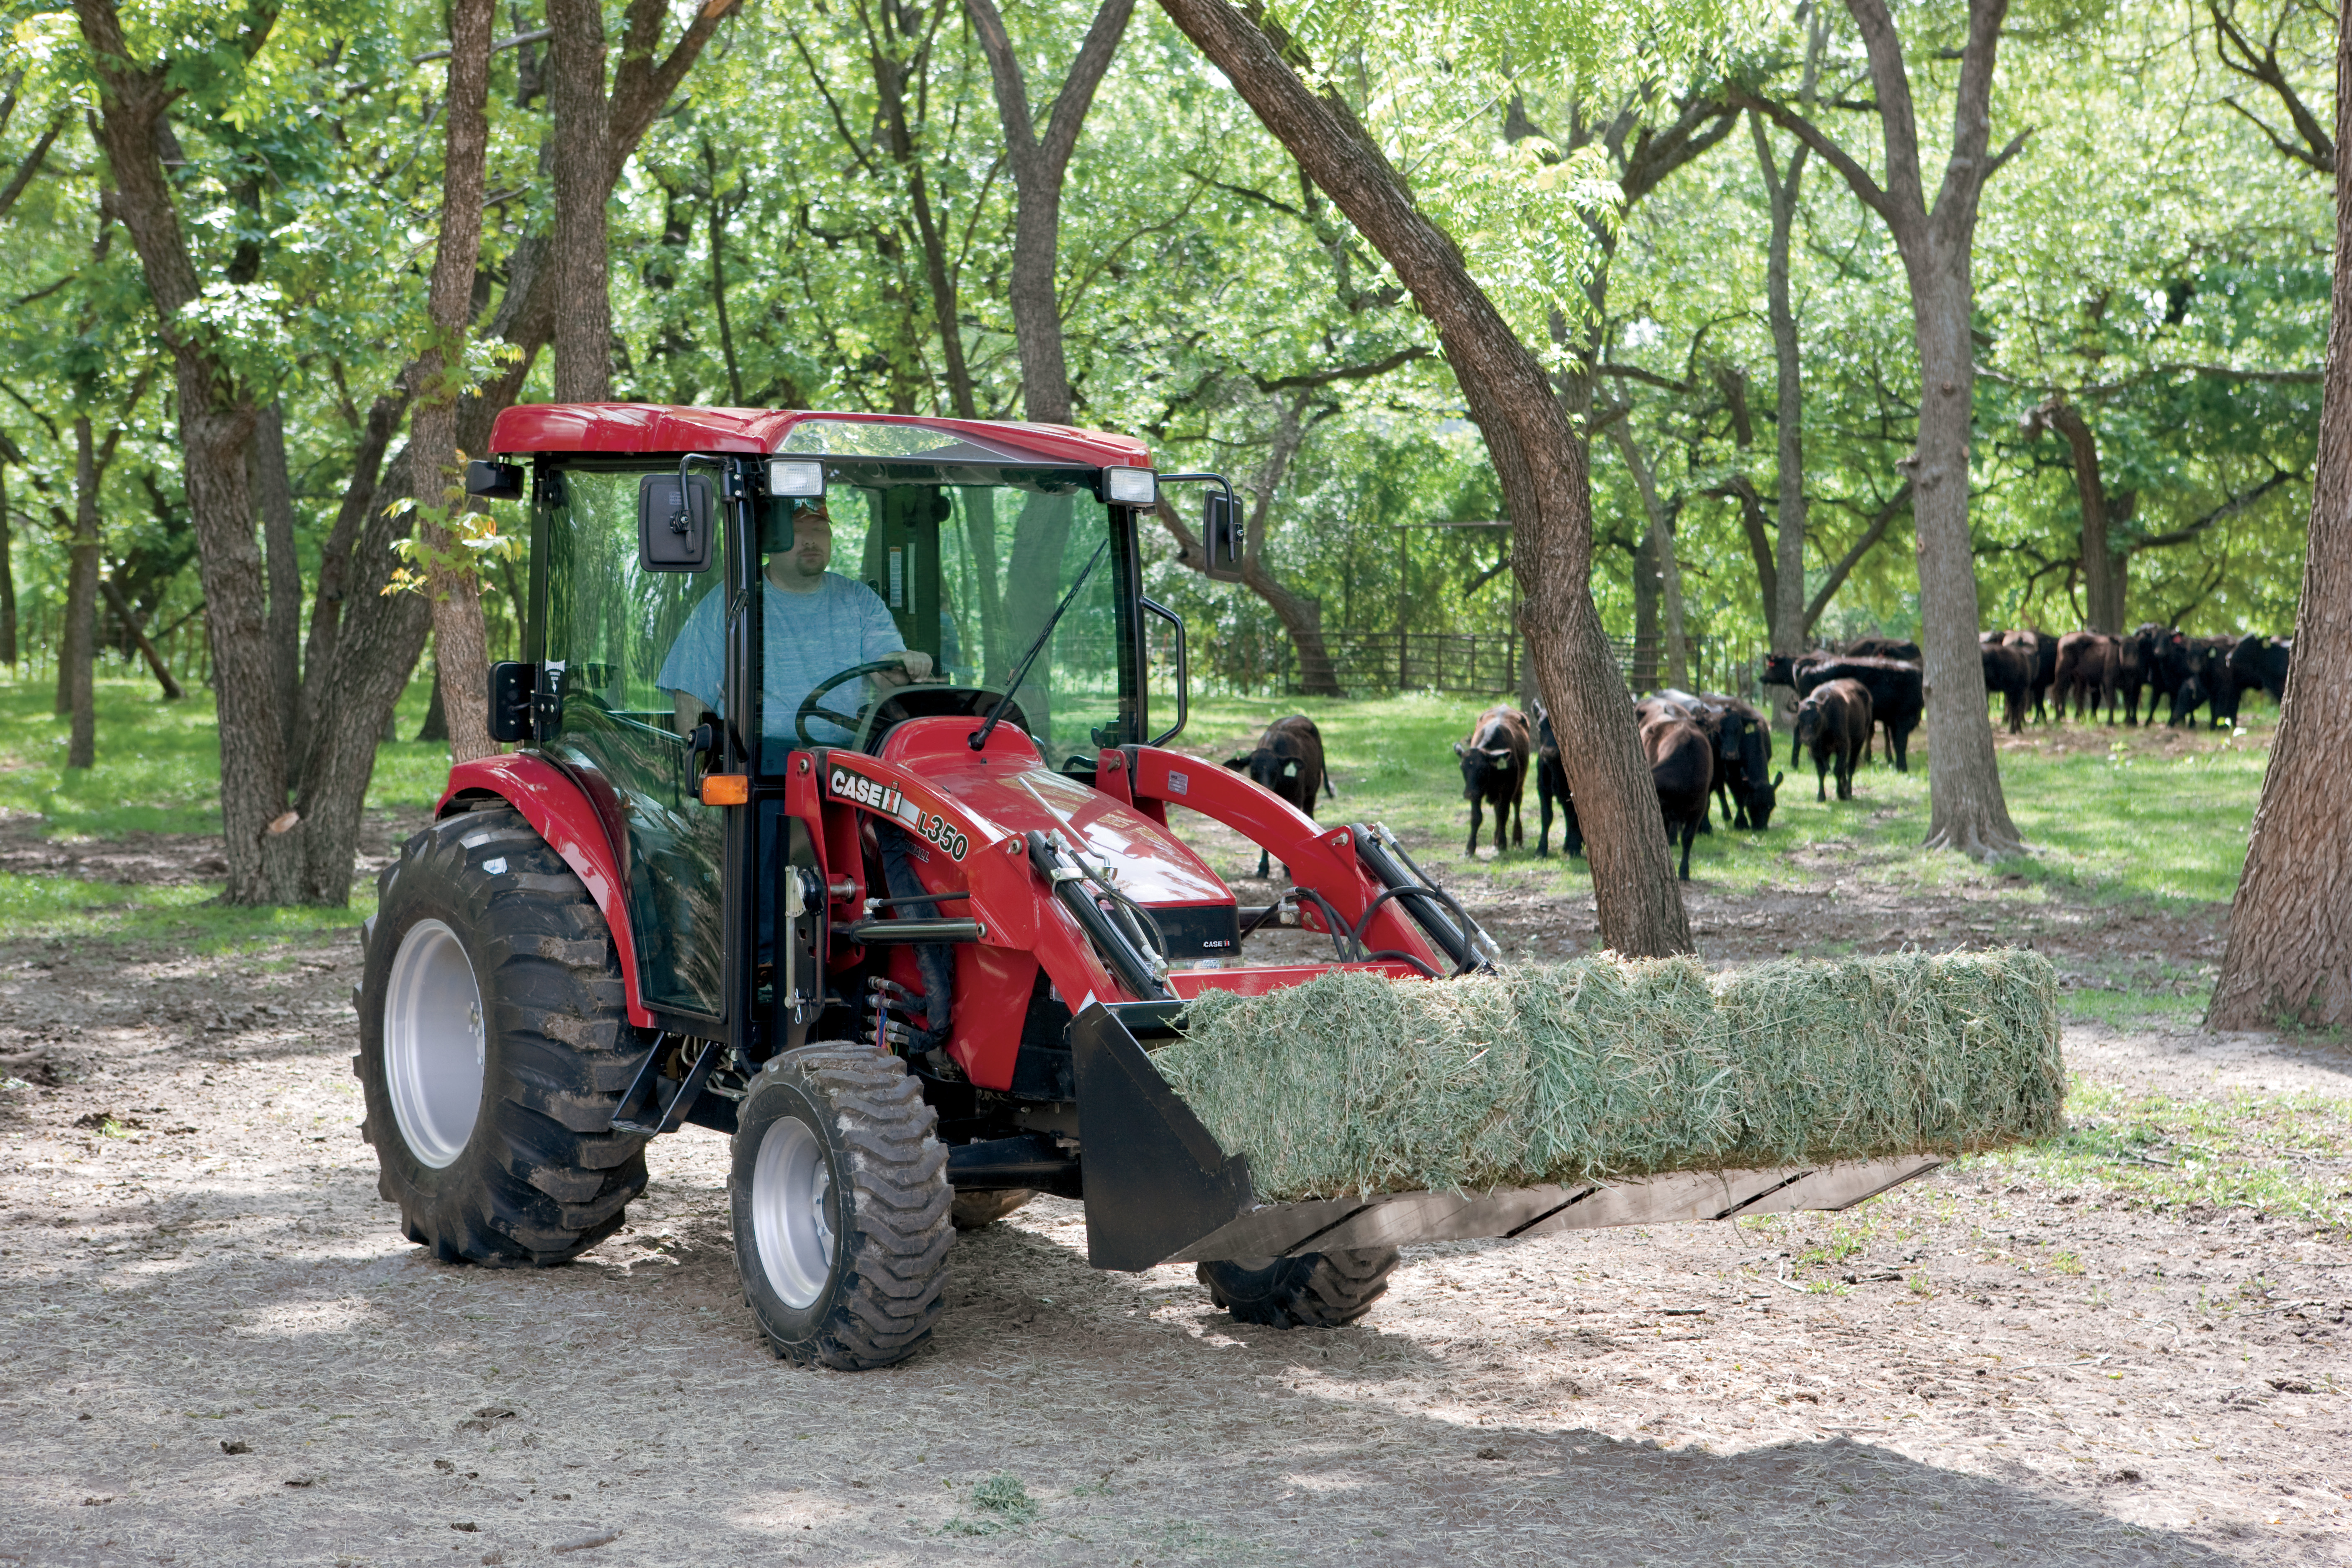 Case IH Announces CVT Option for Farmall B Series Tractors